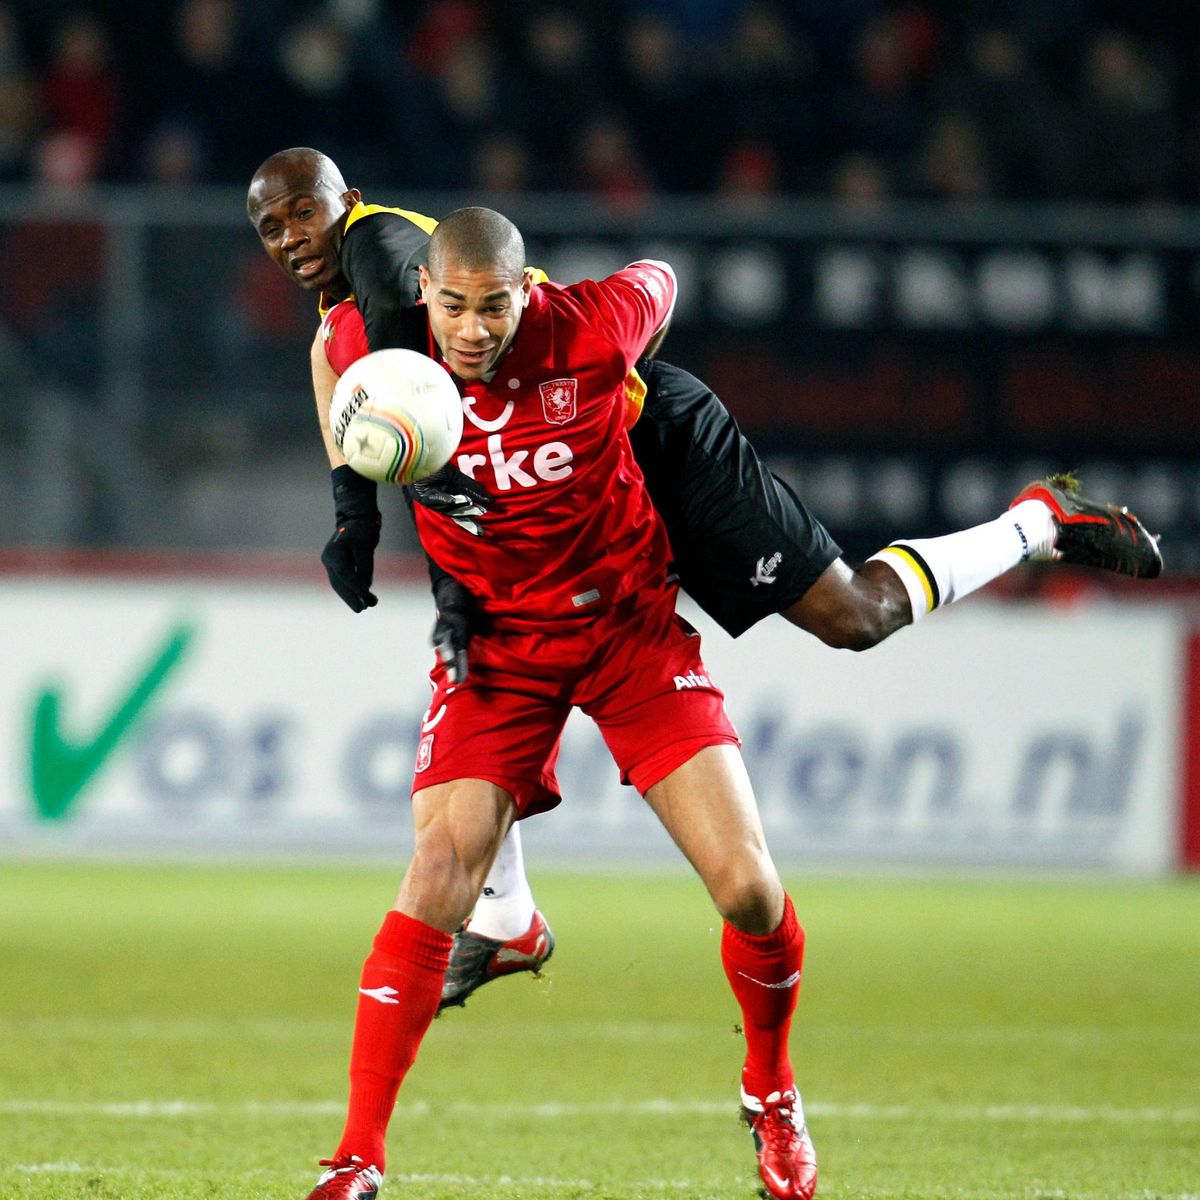 De Amerikaanse Onyewu - die ook voor Twente speelde - stopt met voetballen